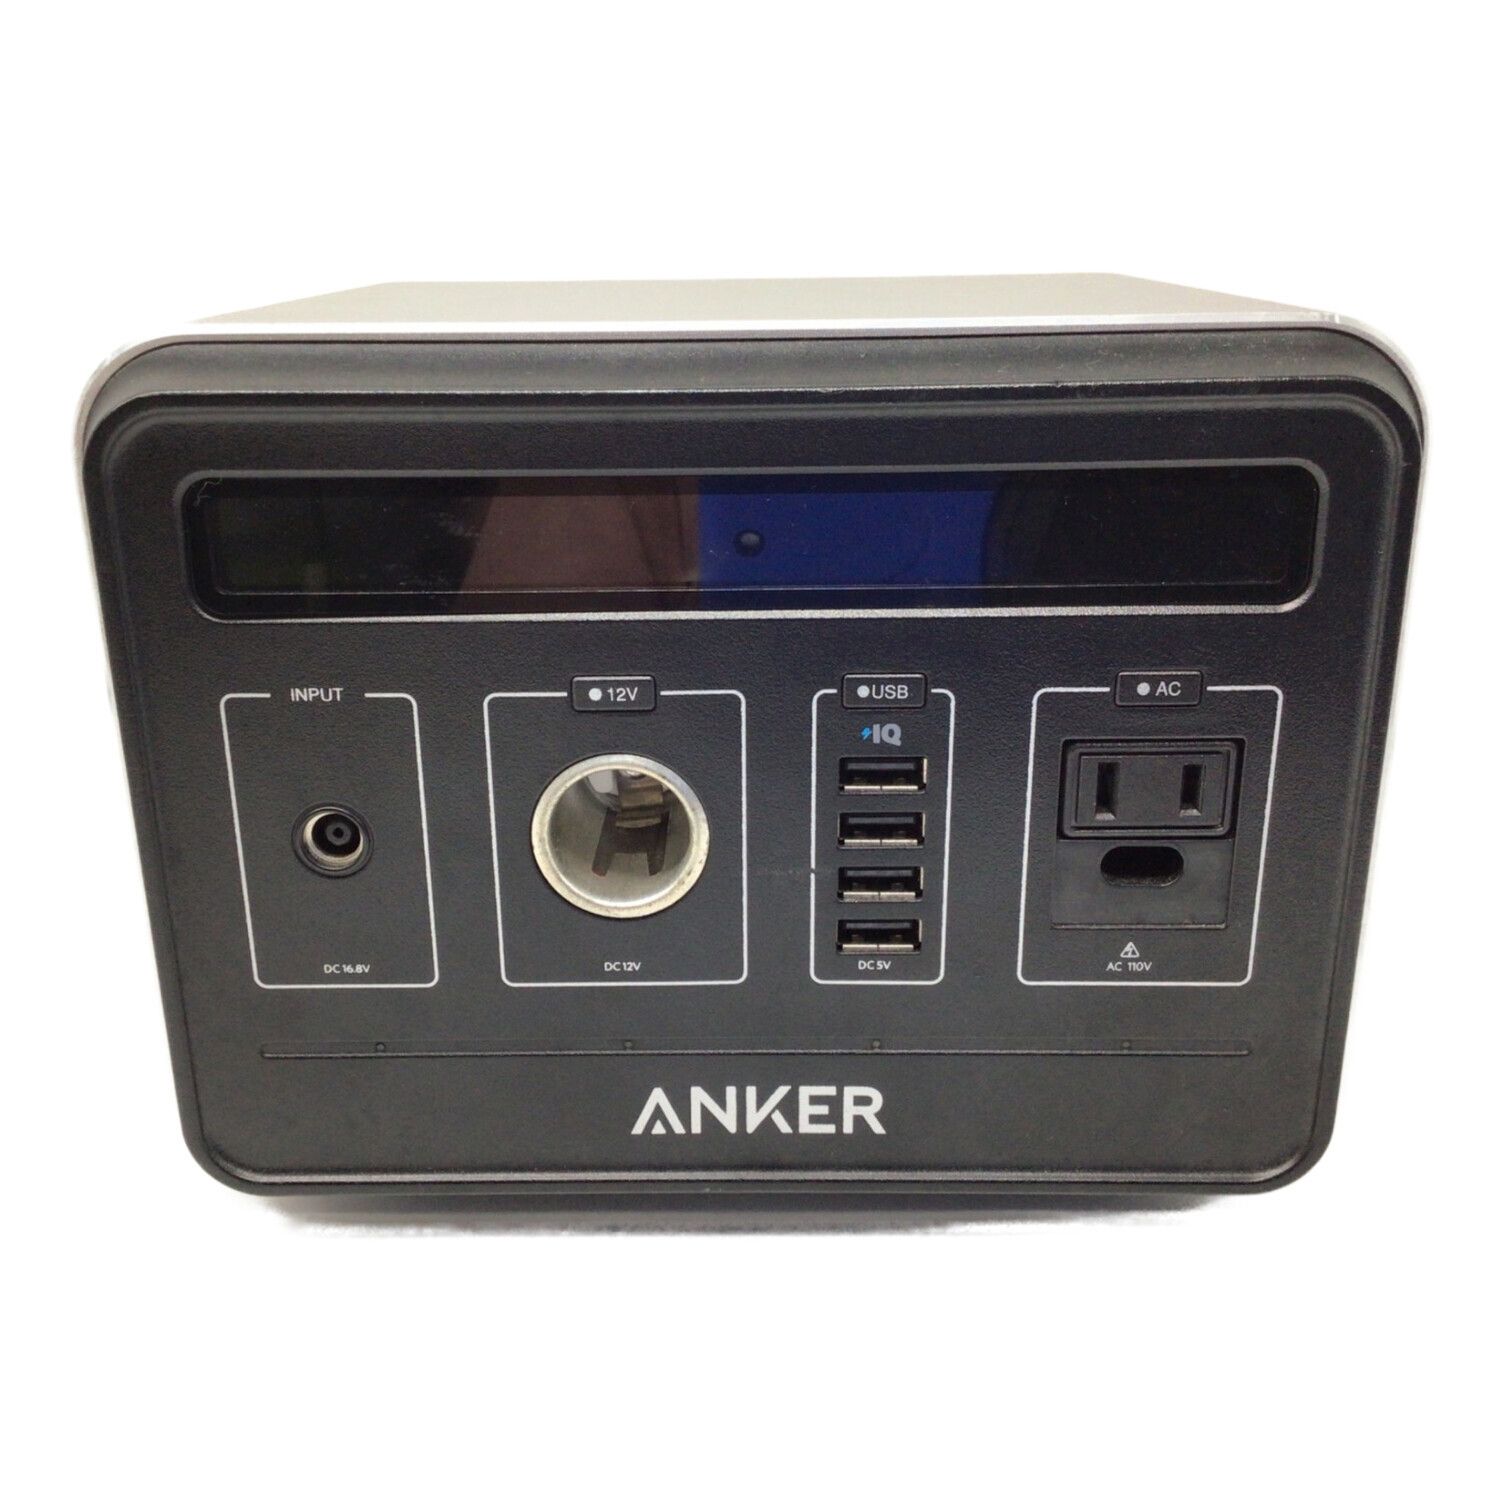 Anker PowerHouse (434Wh ポータブル電源) - アウトドア